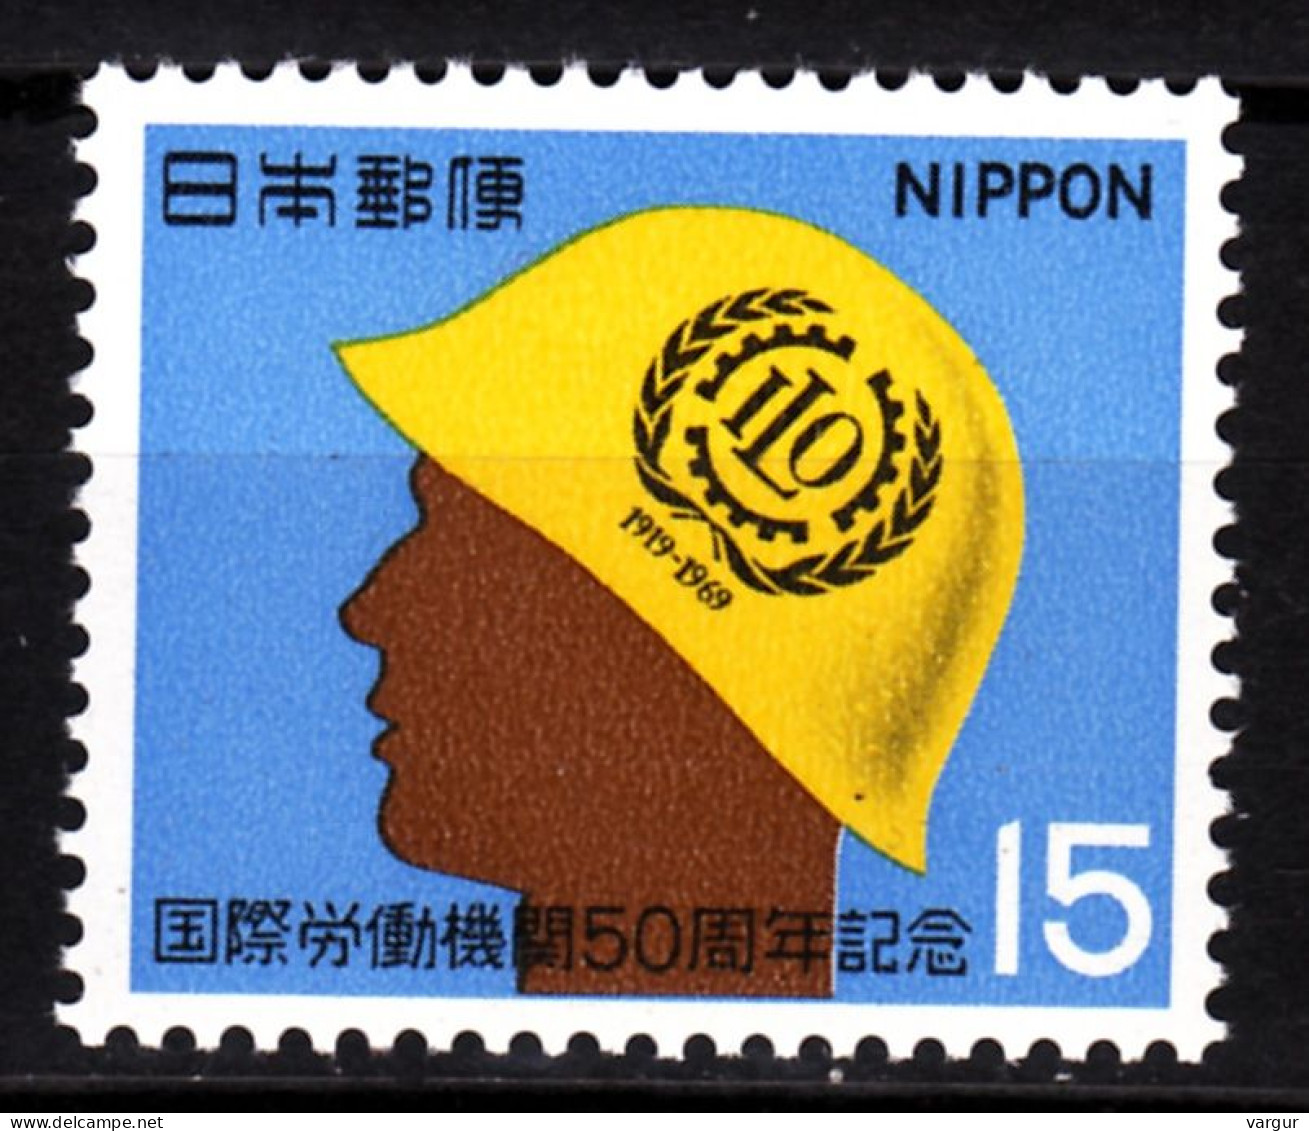 JAPAN 1969 International Labor Organization - 50 Years. ILO / UNO, MNH - OIT